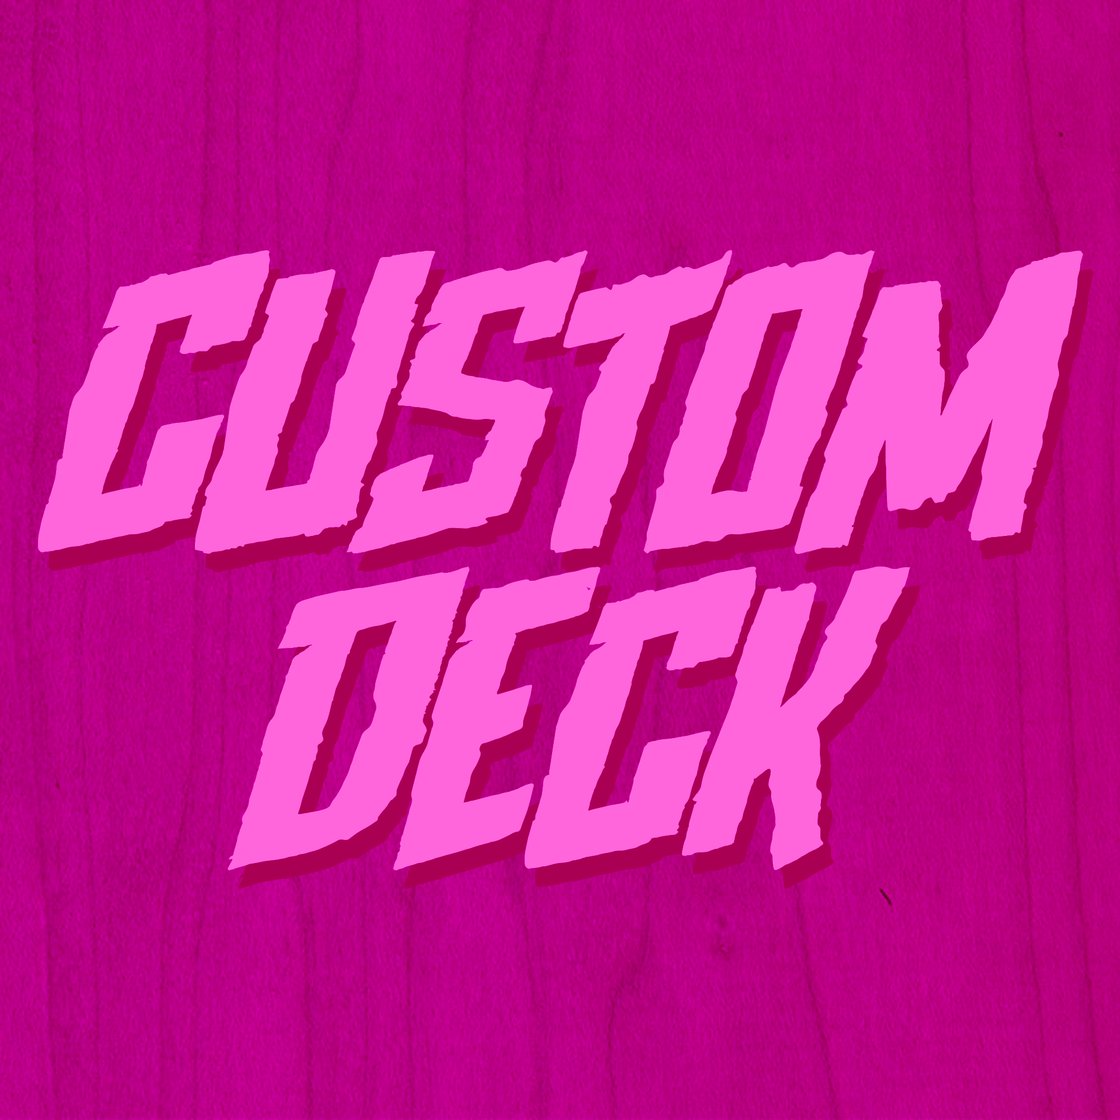 Image of Custom Deck